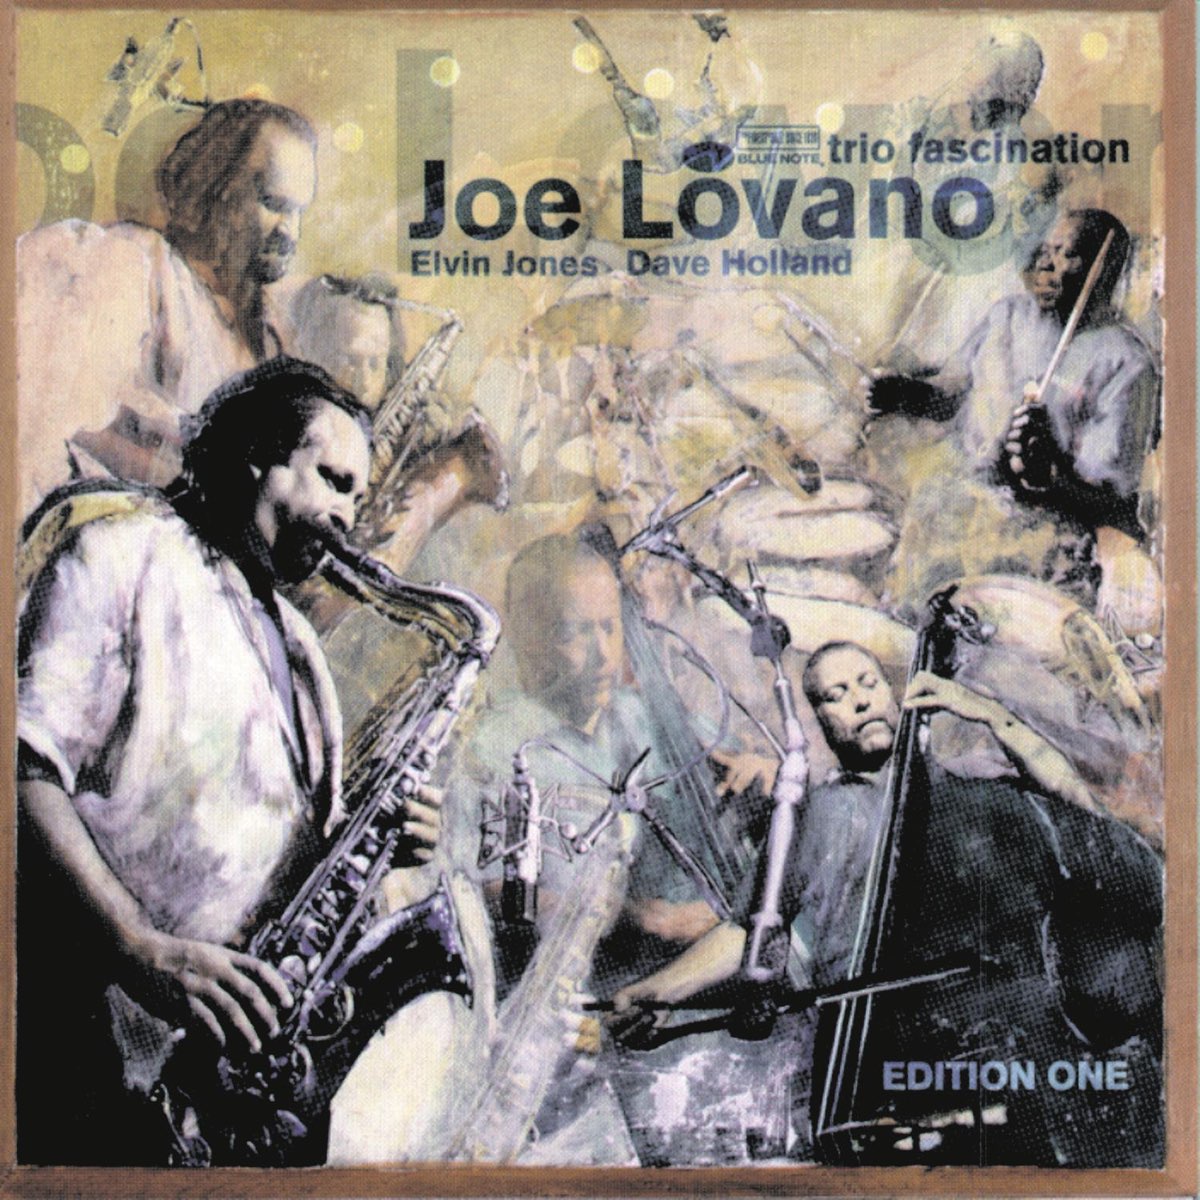 JOE LOVANO - Trio Fascination: Edition One (Blue Note Tone Poet Series) - 2LP - Vinyl